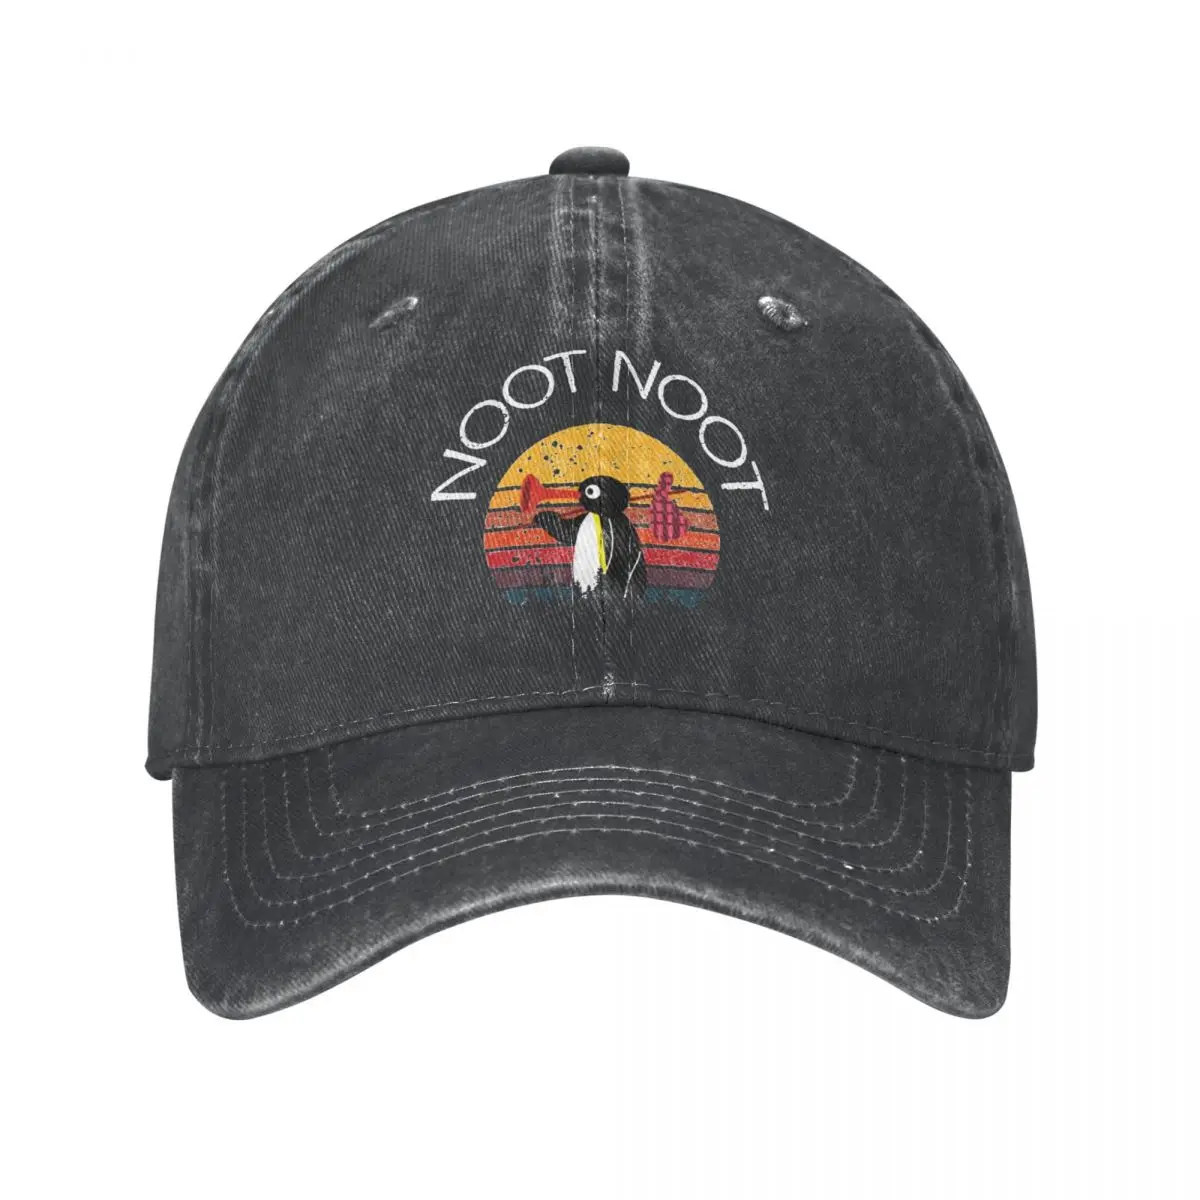 

Vintage Penguin Noot Noot Baseball Caps Unisex Style Distressed Denim Washed Headwear Outdoor Summer Caps Hat